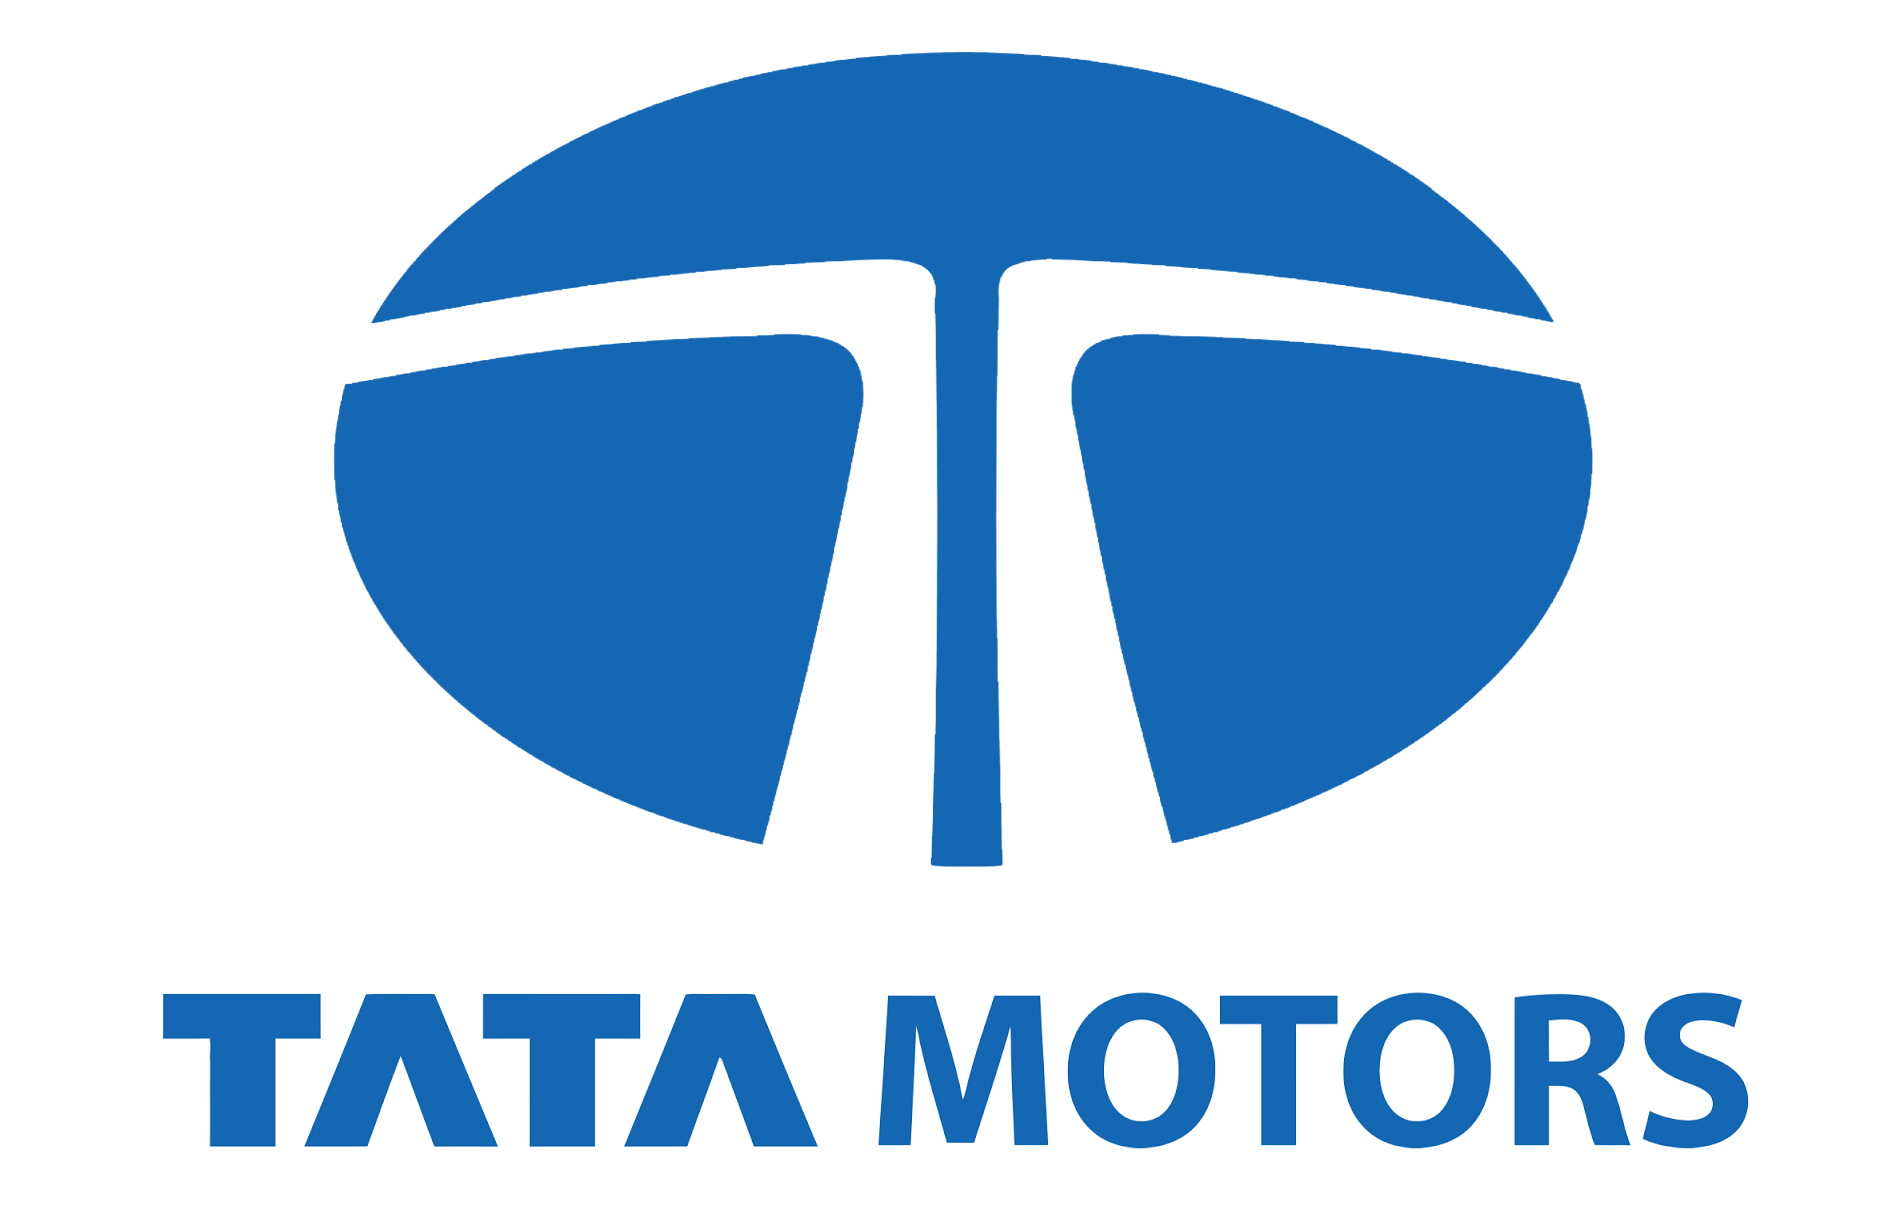 Tata Motors Cars Showroom - Varenyam Motor Car|Show Room|Automotive